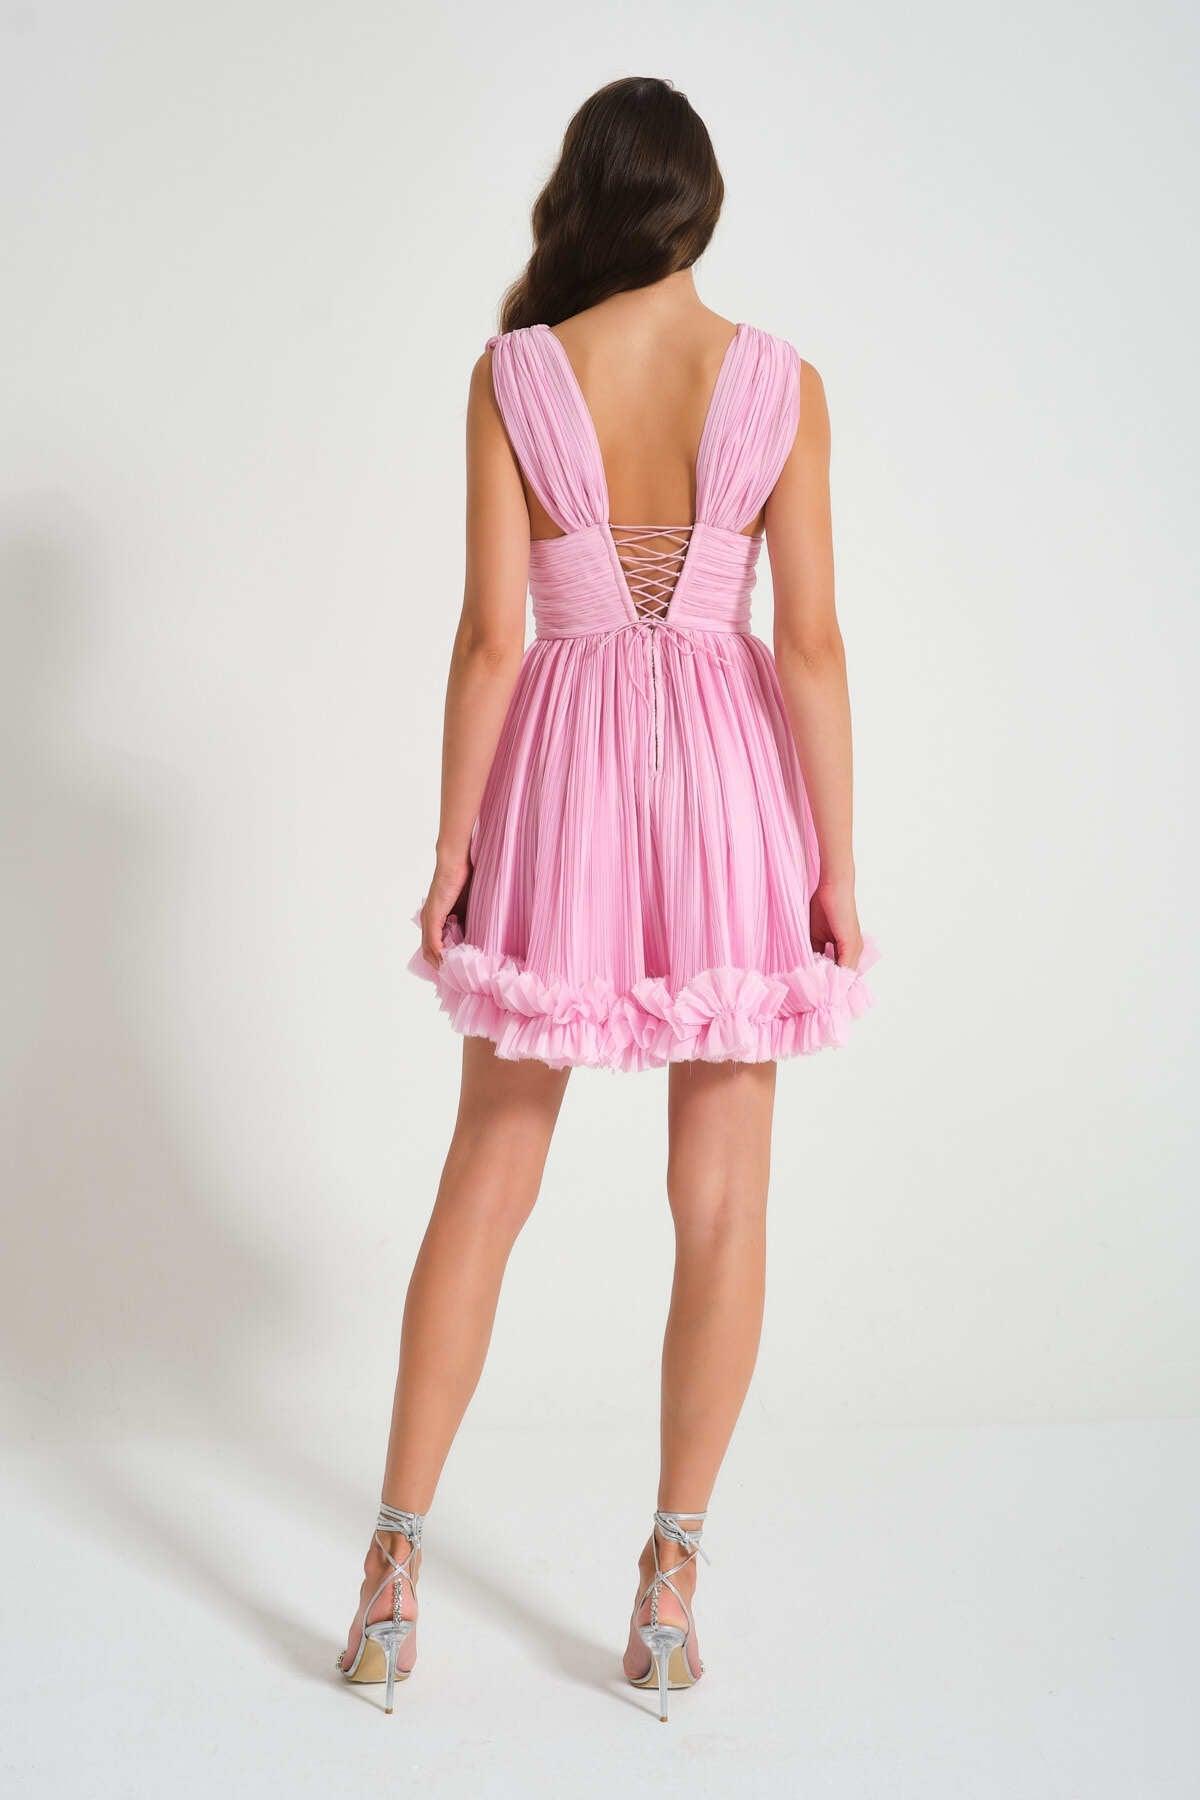 Lotus Pink Pleated Chiffon Frilly Mini Dress - Swordslife